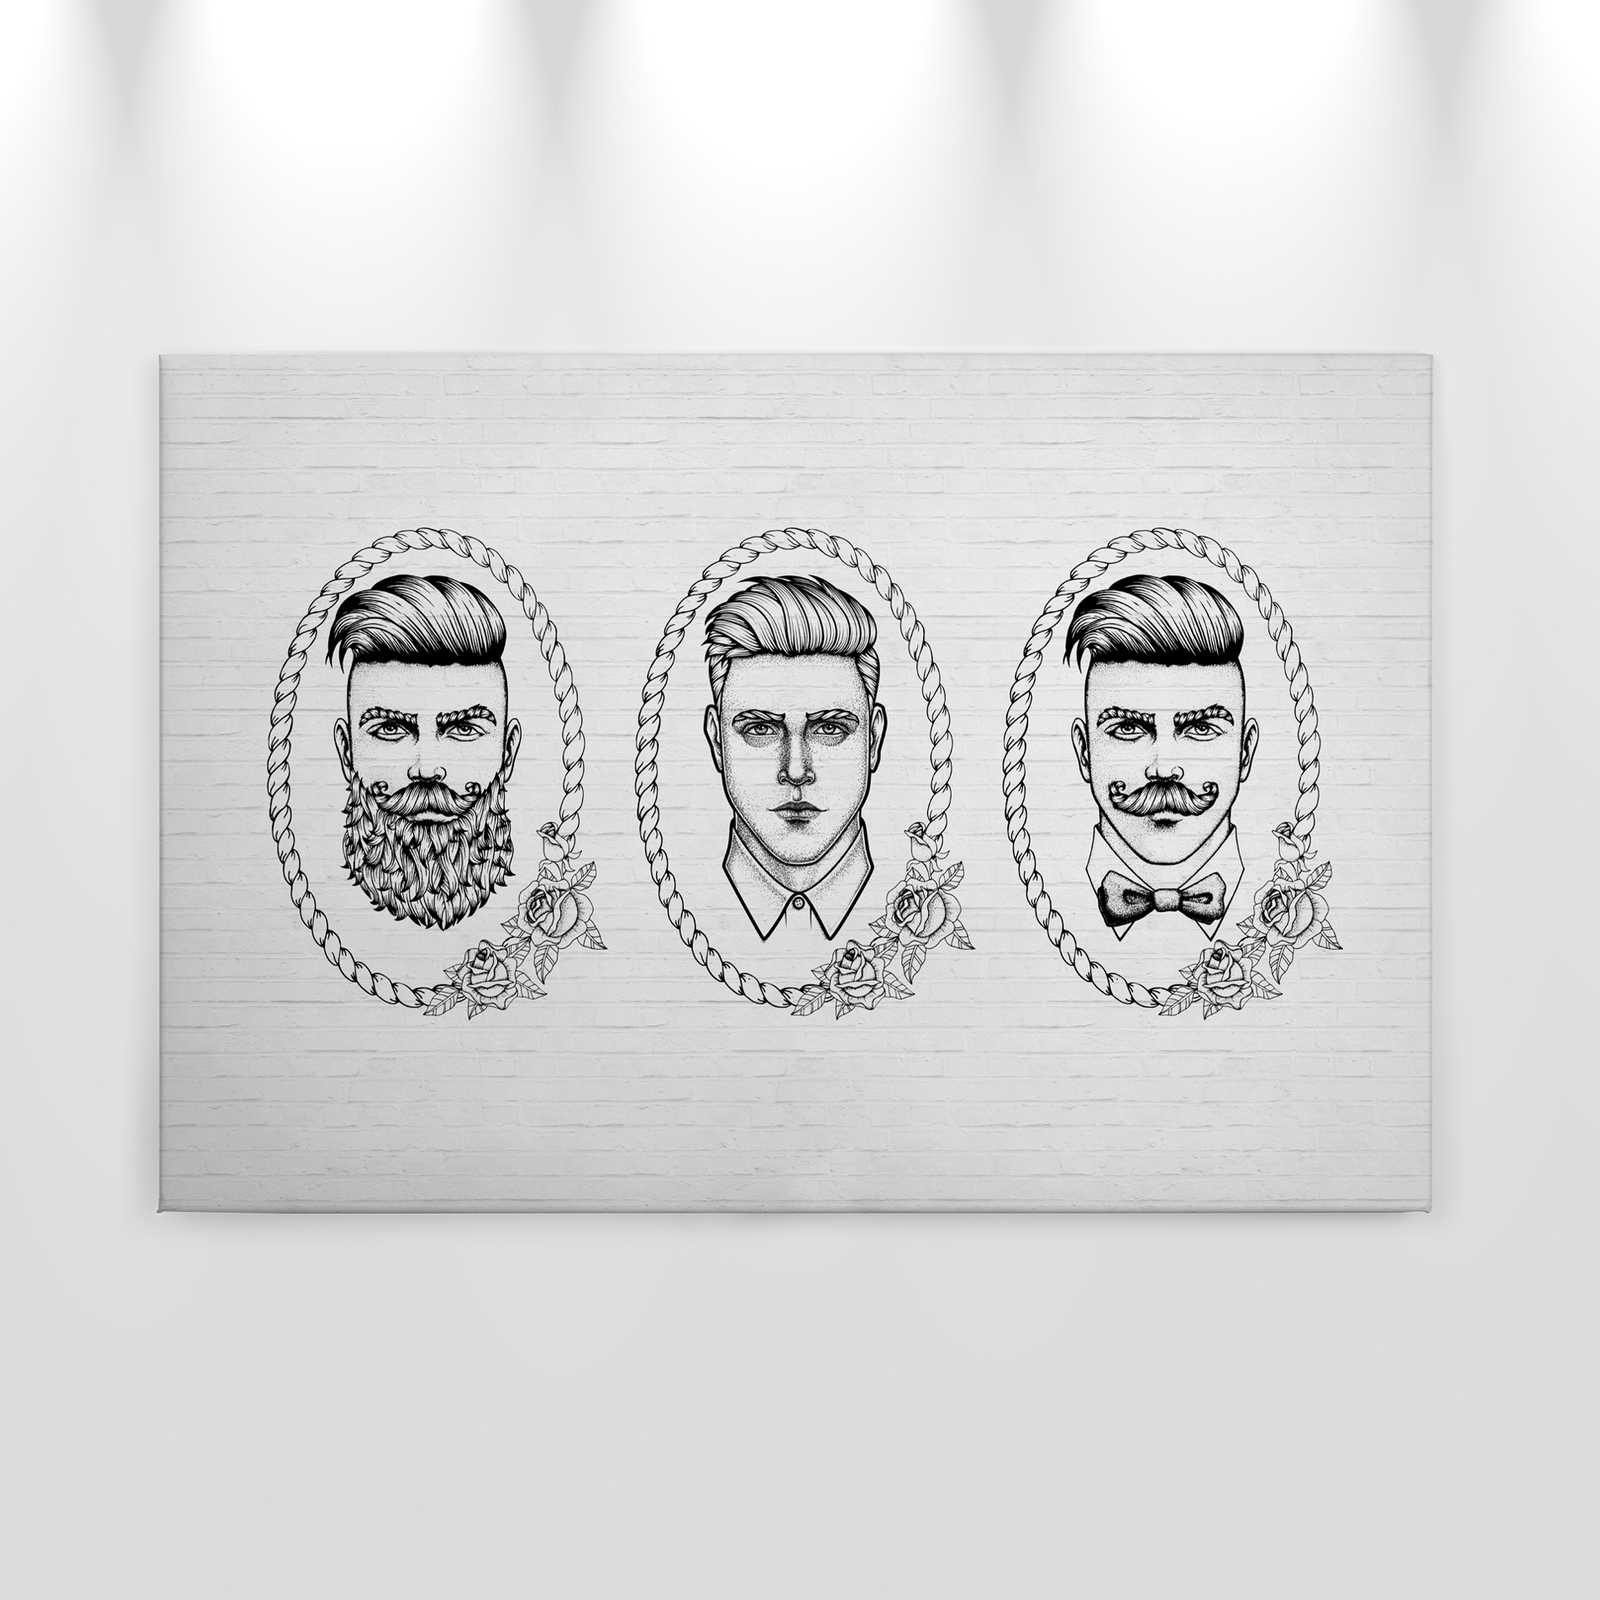             Zwart-wit canvas schilderij met mannenportretten in komische stijl - 0.90 m x 0.60 m
        